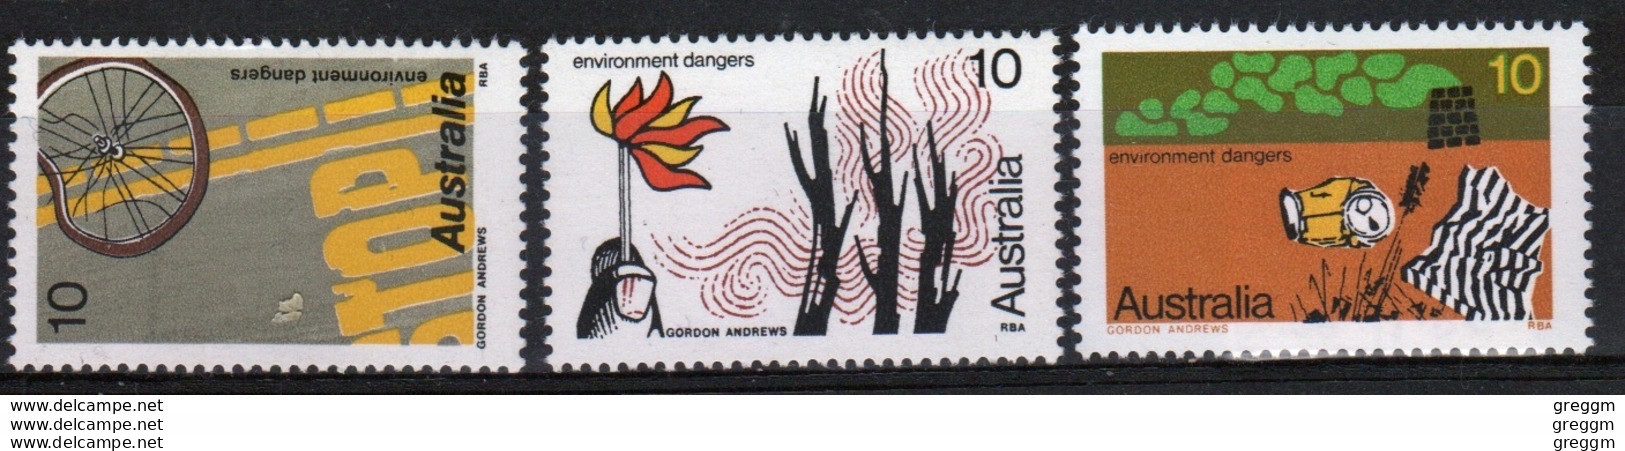 Australia 1975 Queen Elizabeth Set Of Stamps To Environment Dangers. - Nuevos